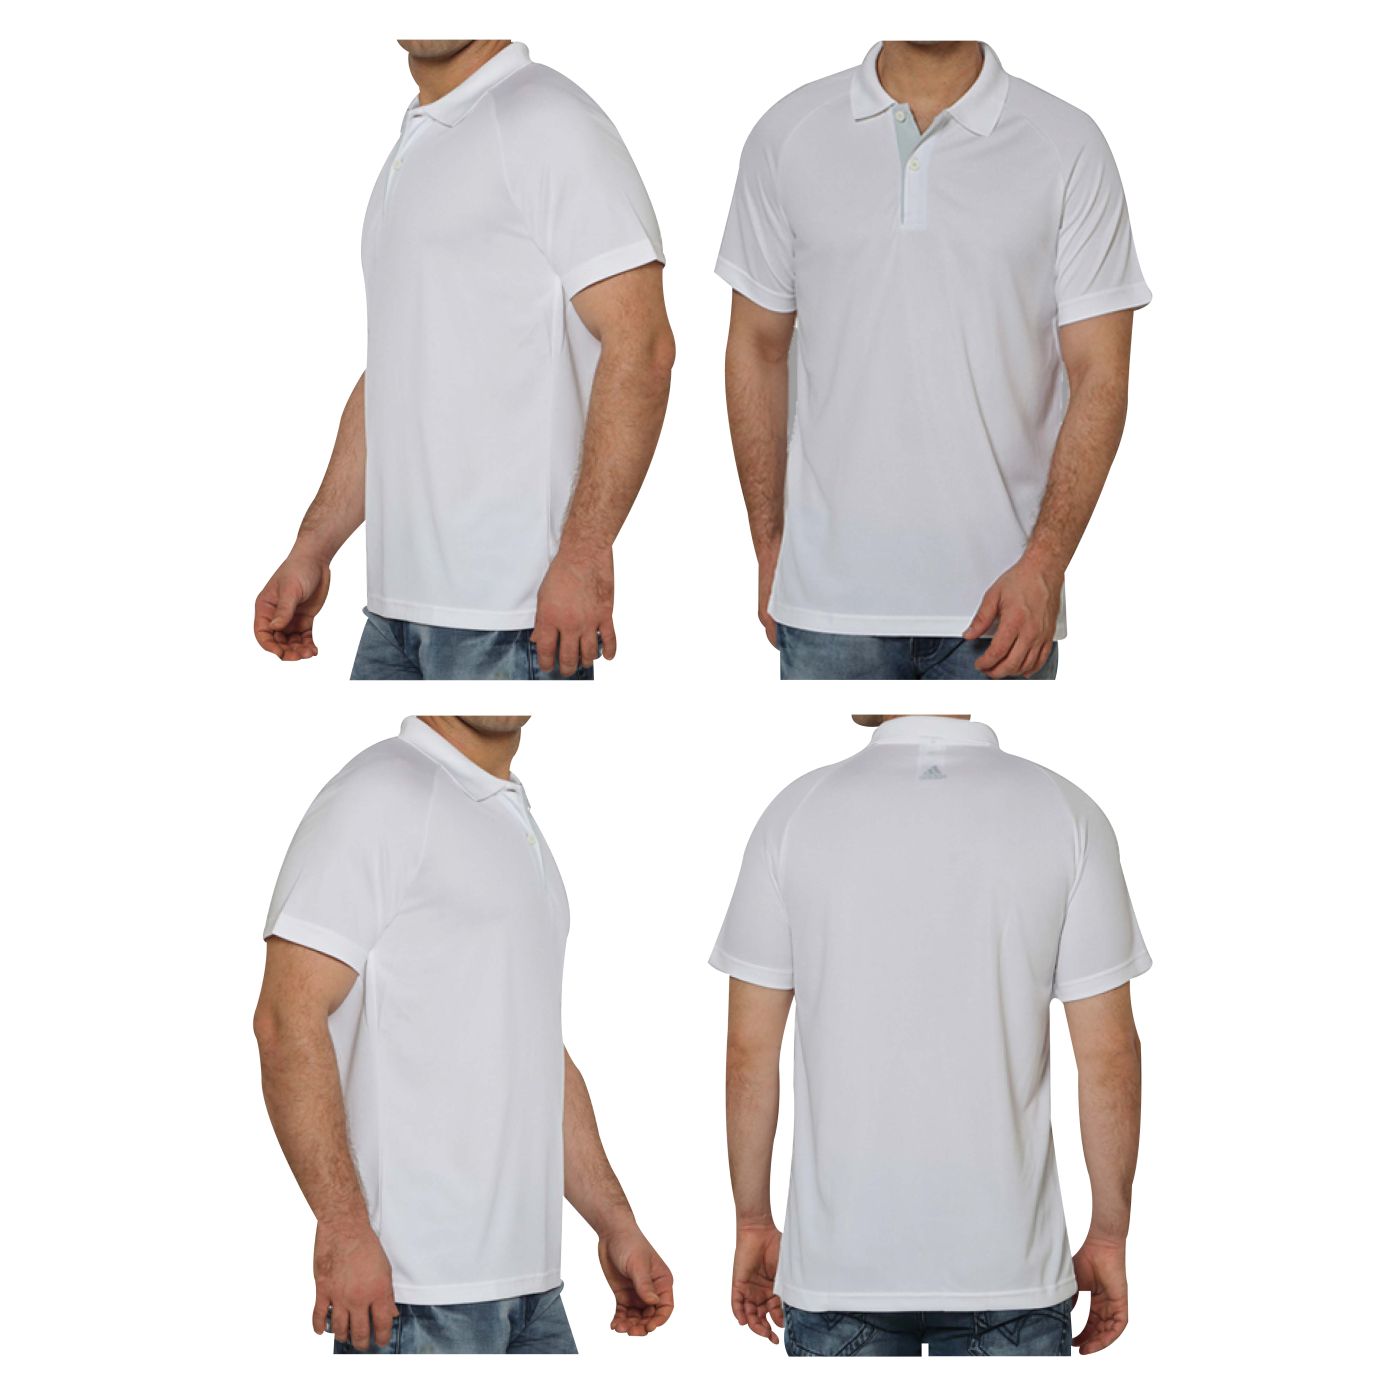 Adidas Dry Fit White T Shirt